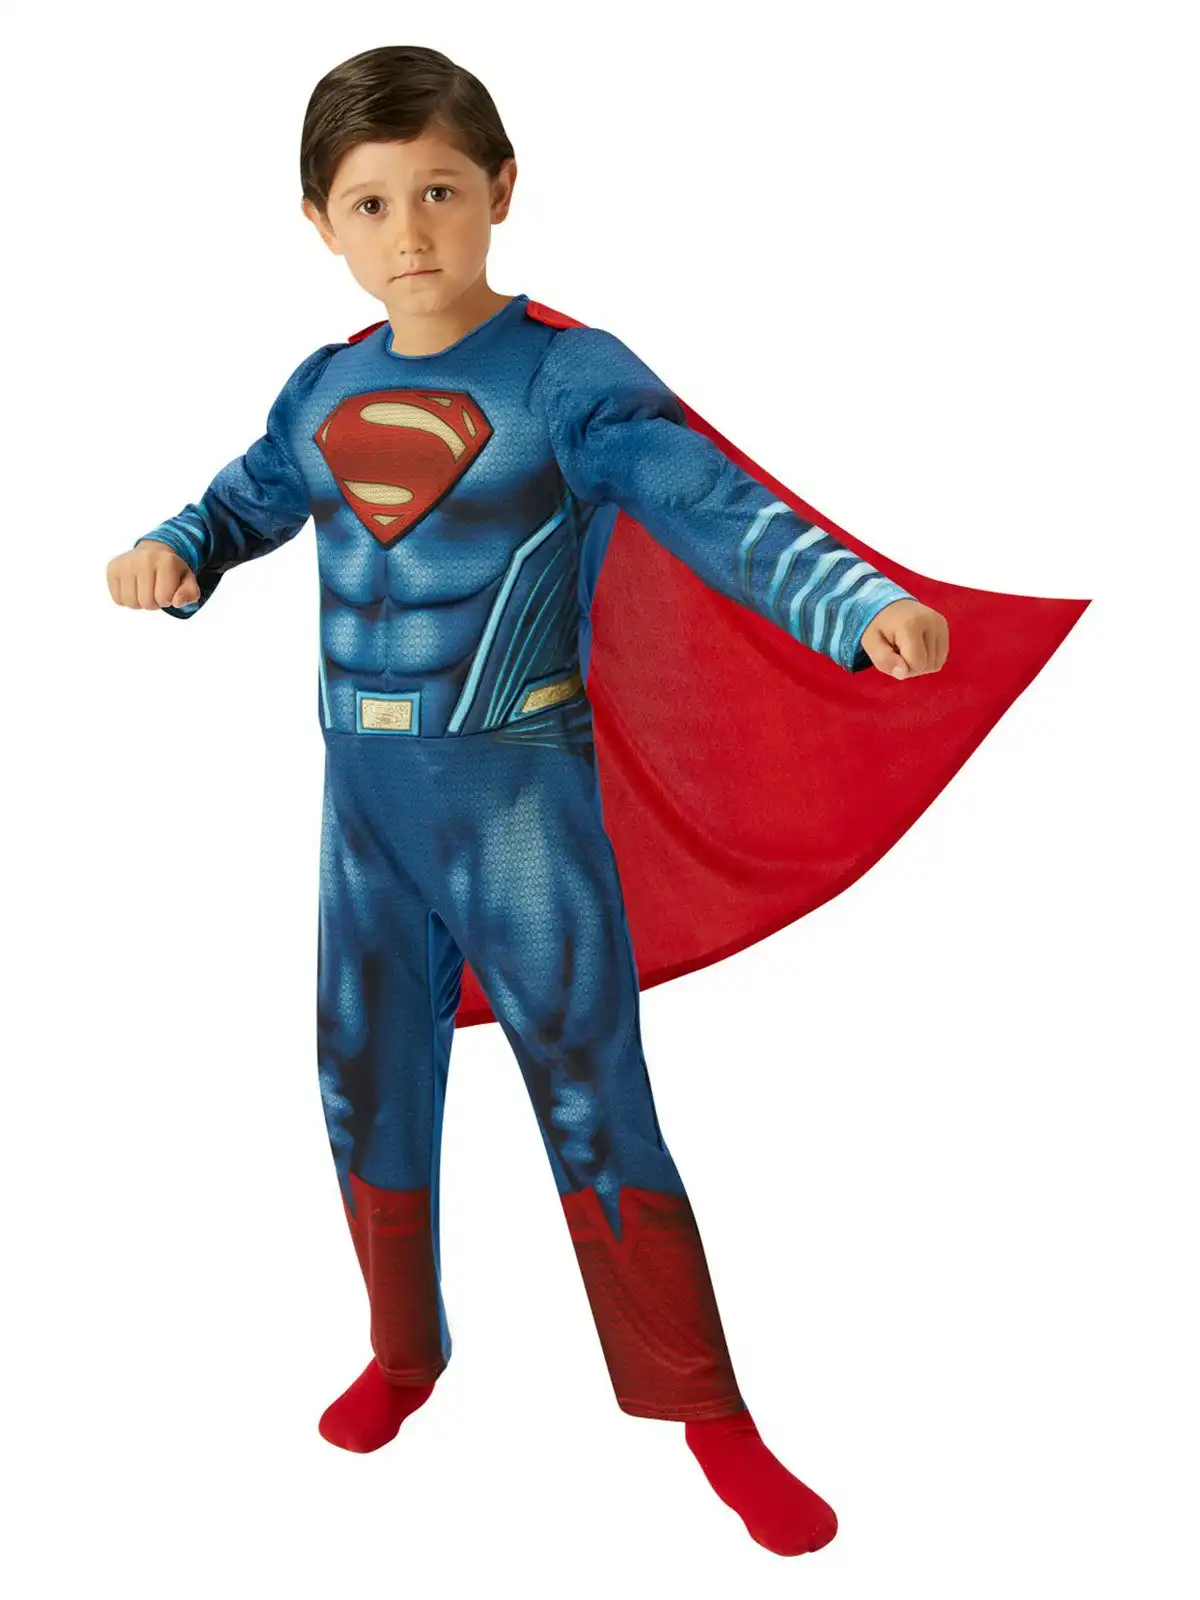 DC Comics Superman Deluxe Dress Up Party Costume Kids/Boys/Children Size 9-10